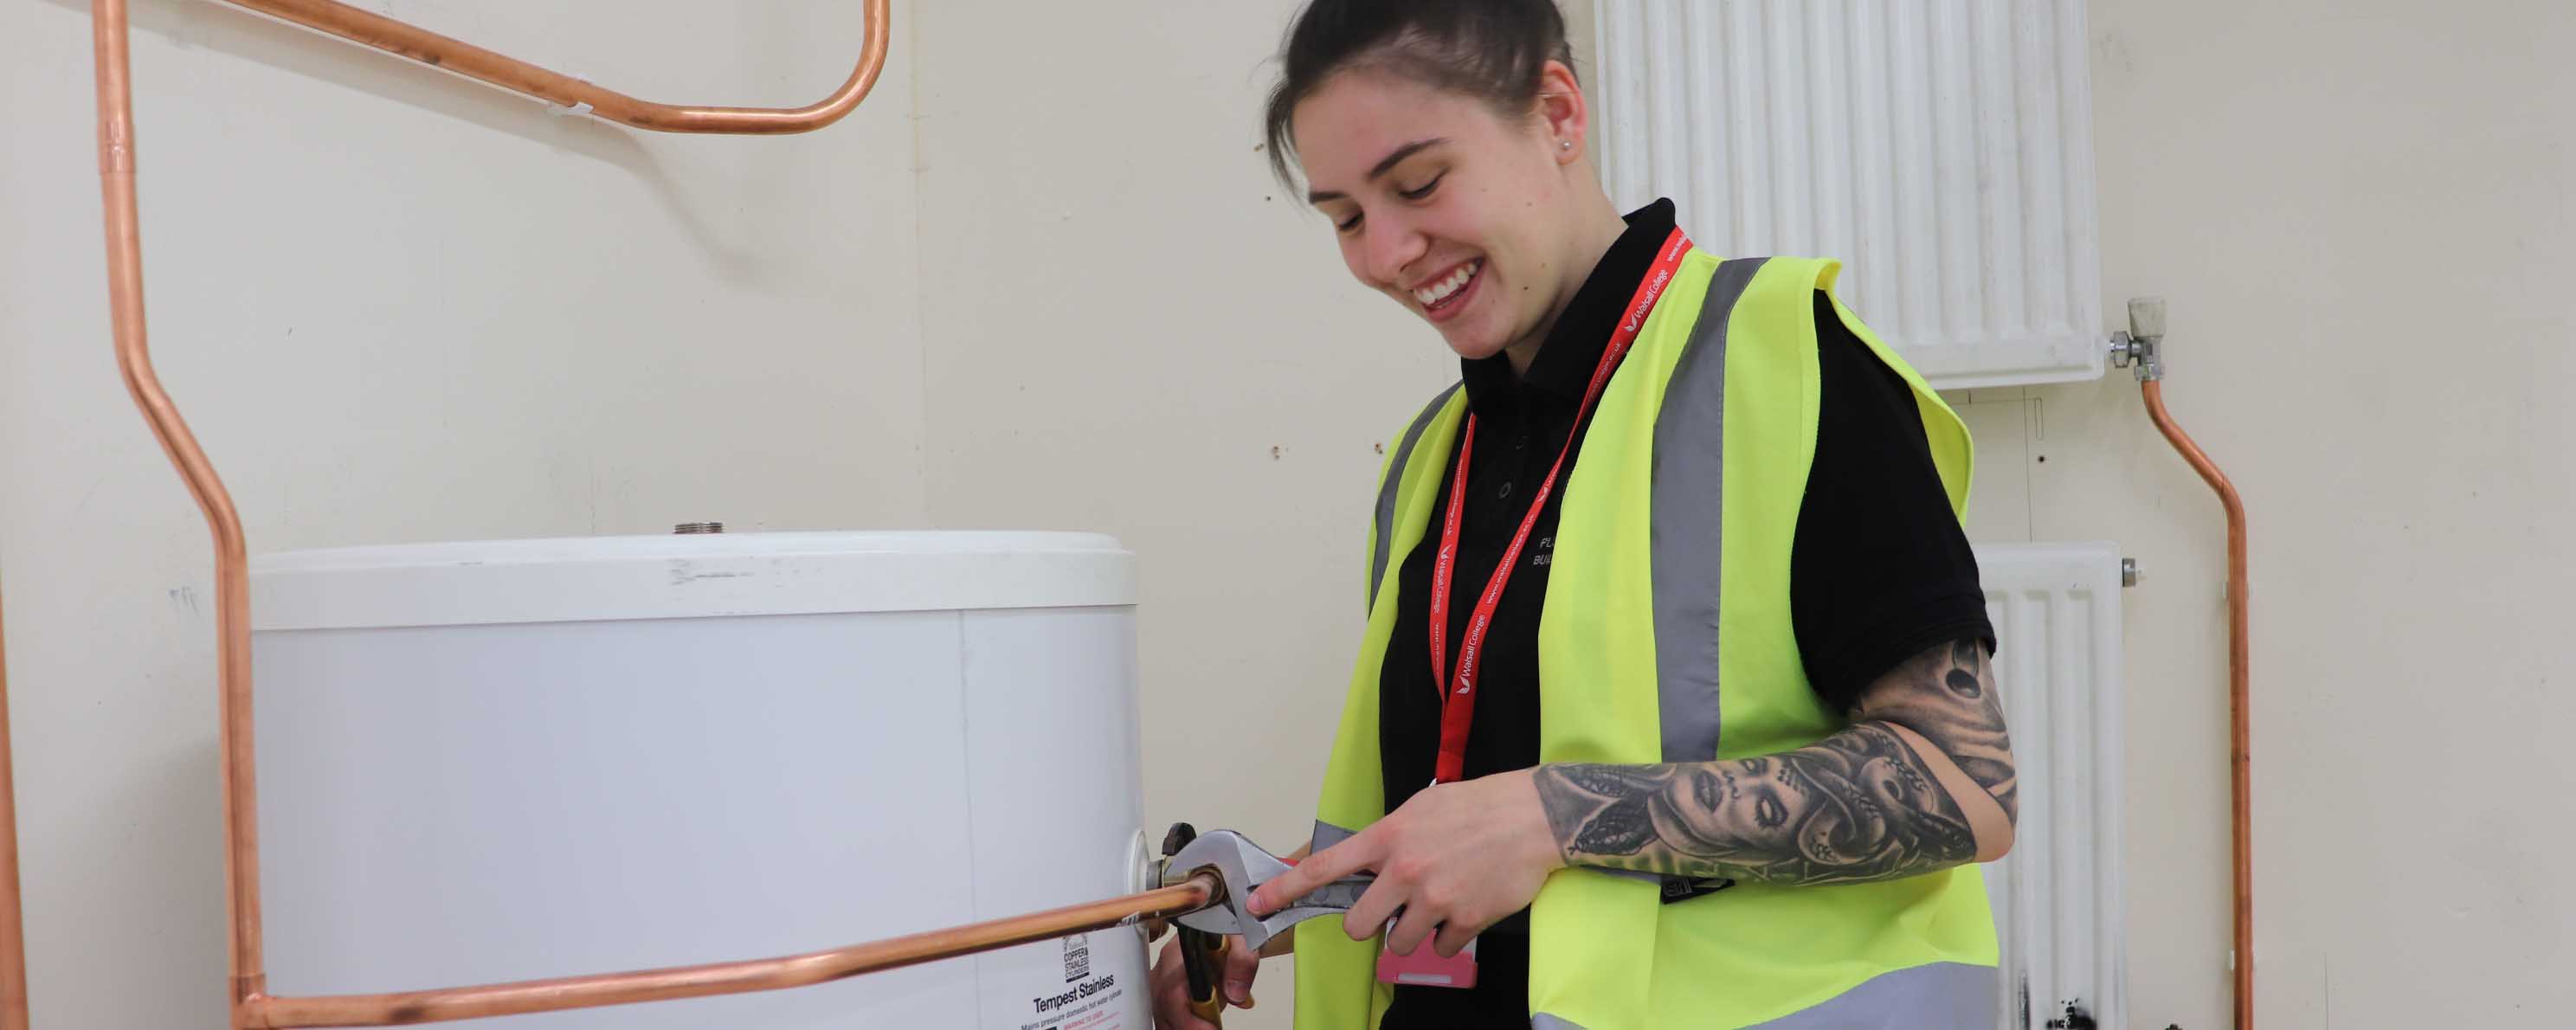 female apprentice plumber at work